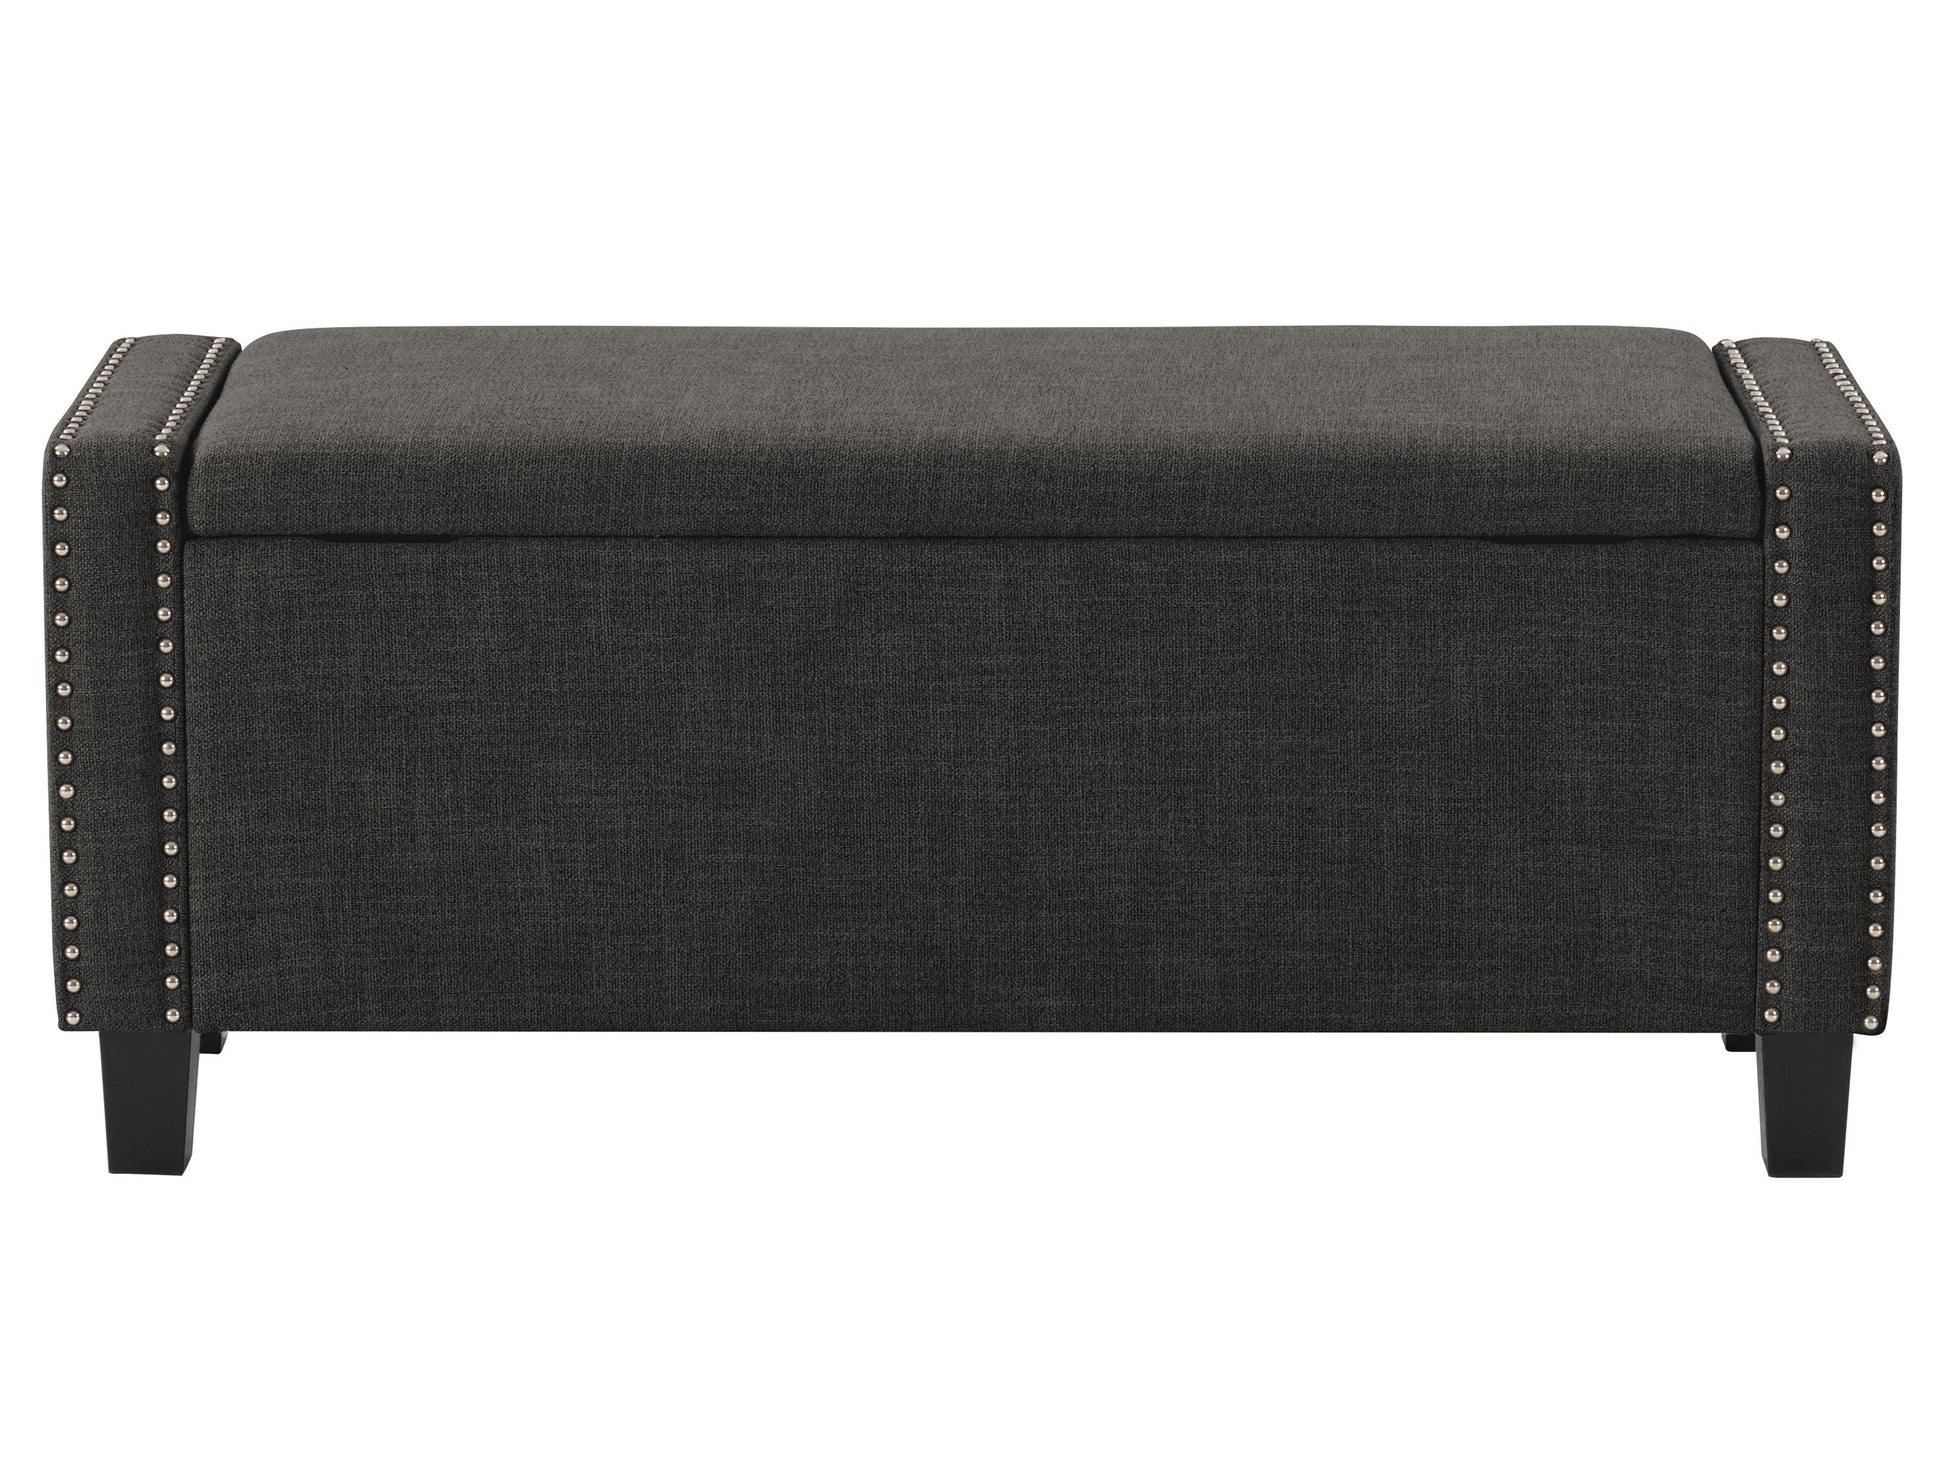 dark grey End of Bed Storage Bench Luna Collection product image by CorLiving#color_luna-dark-grey